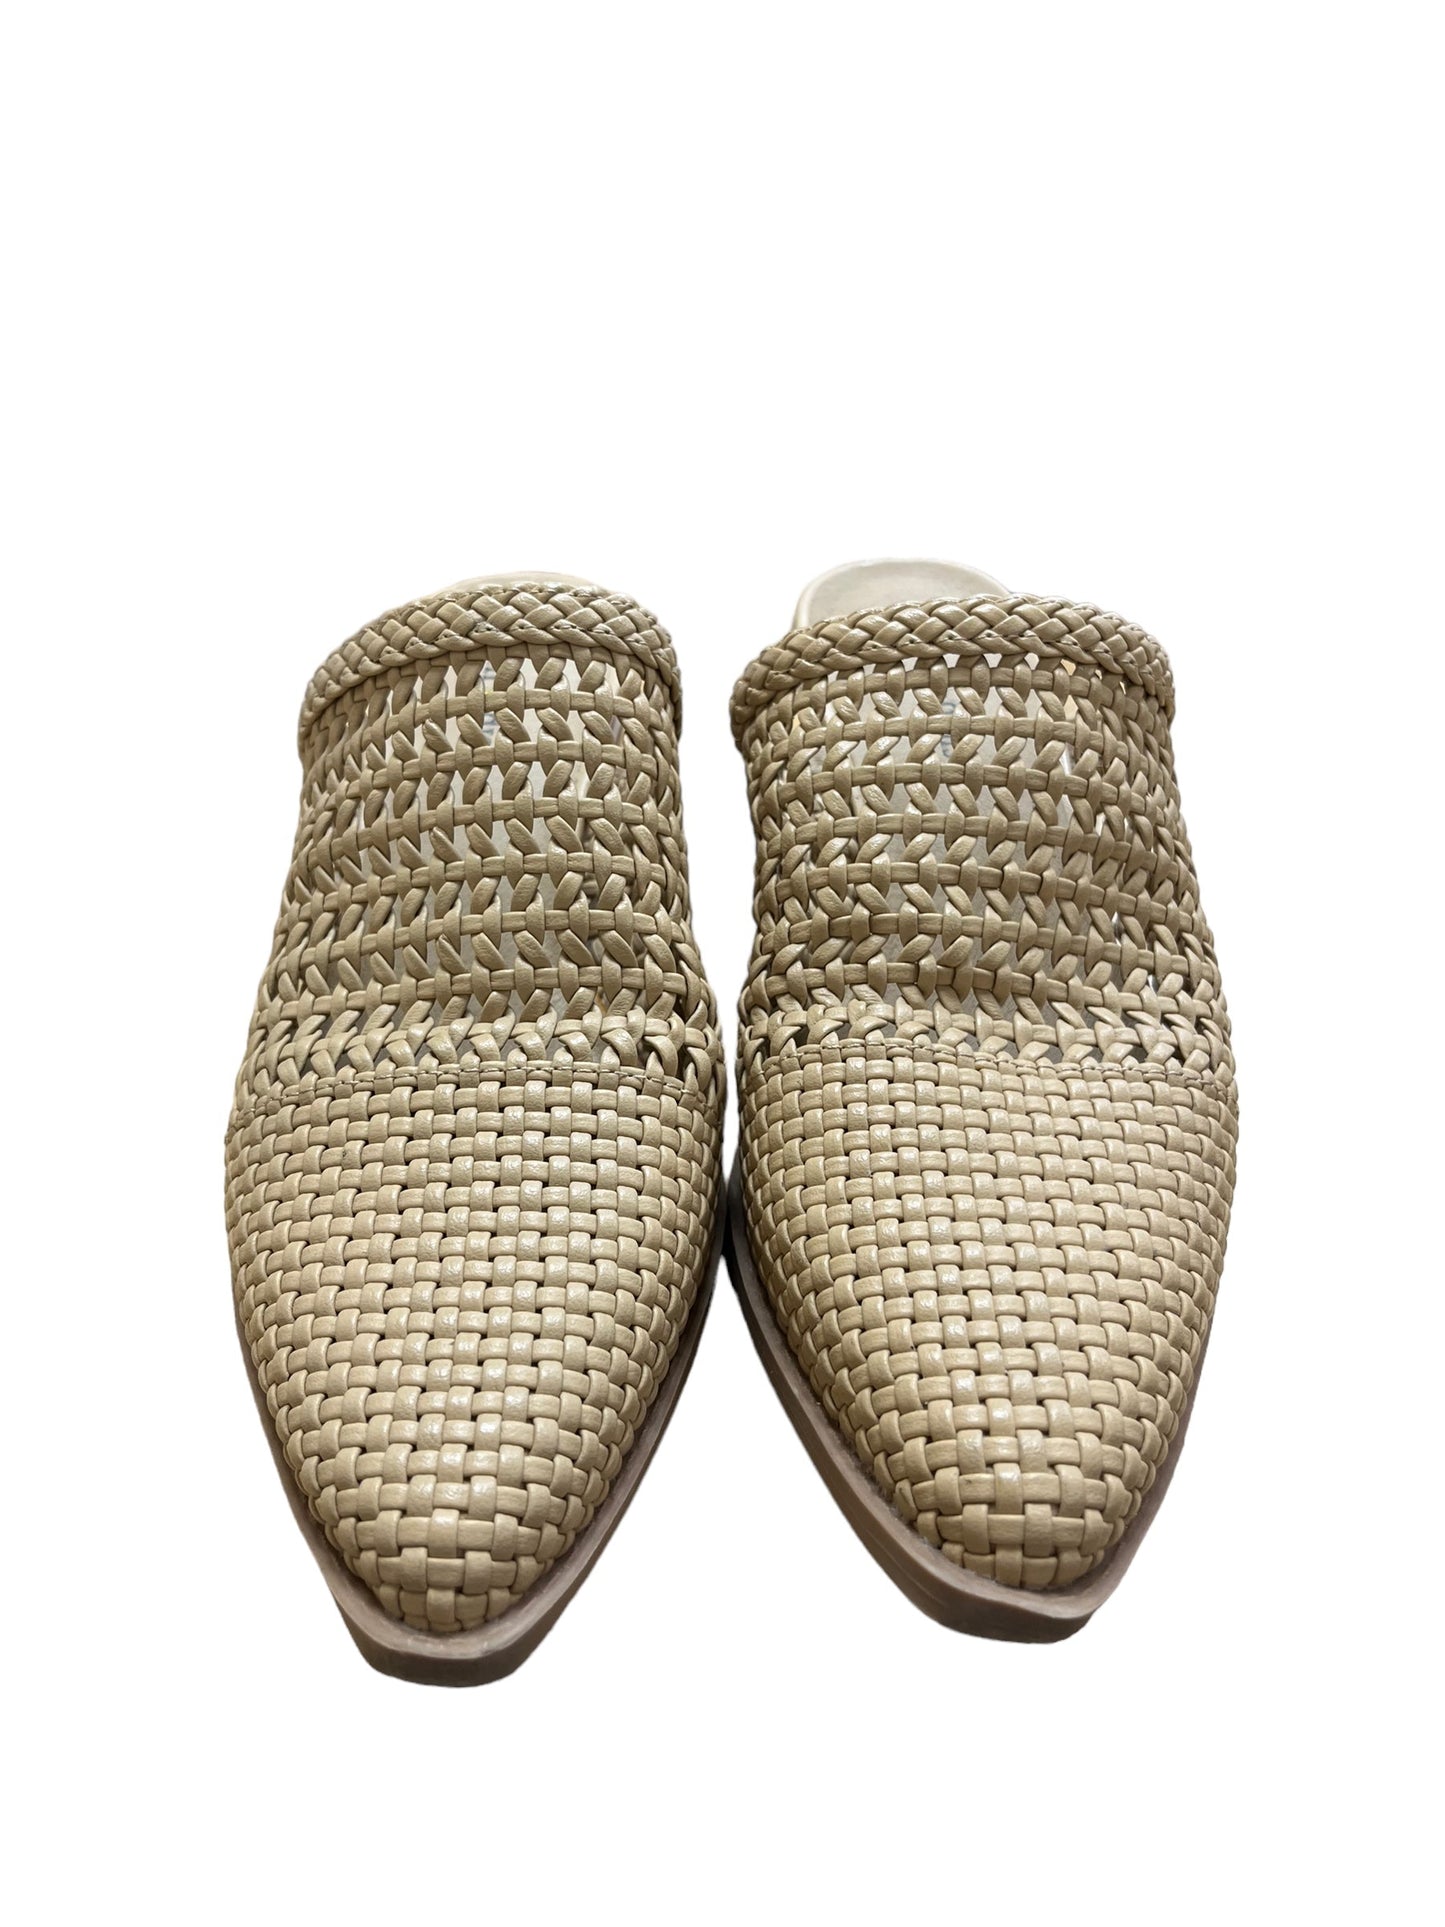 Sandals Heels Platform By Italian Shoemakers  Size: 8